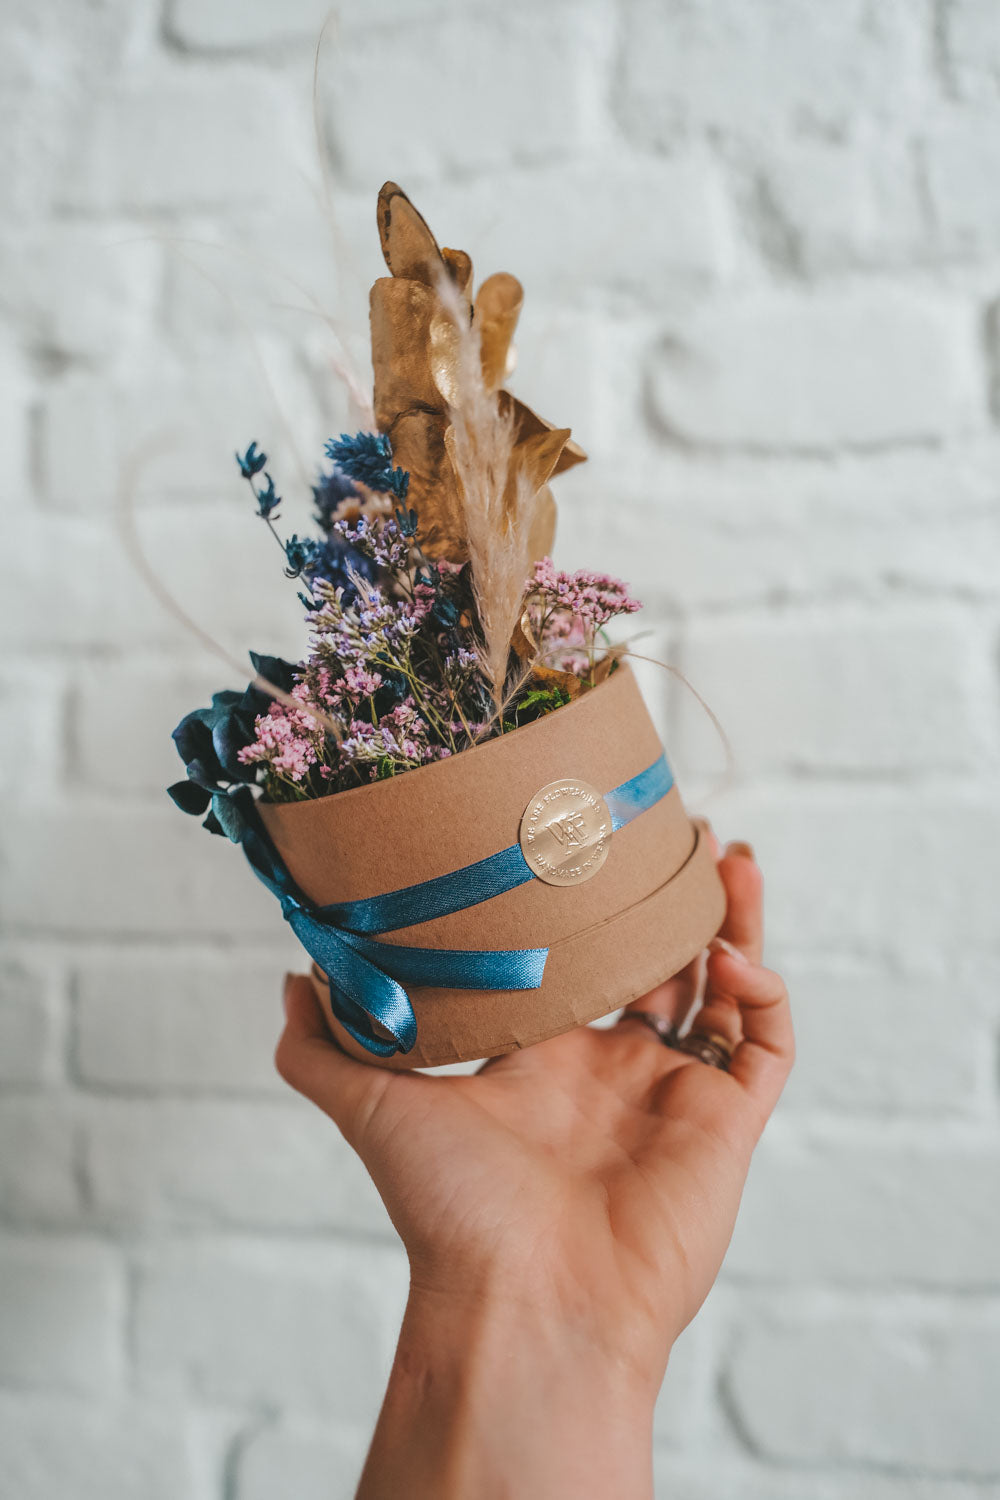 Blue Moon Dried Flower Box